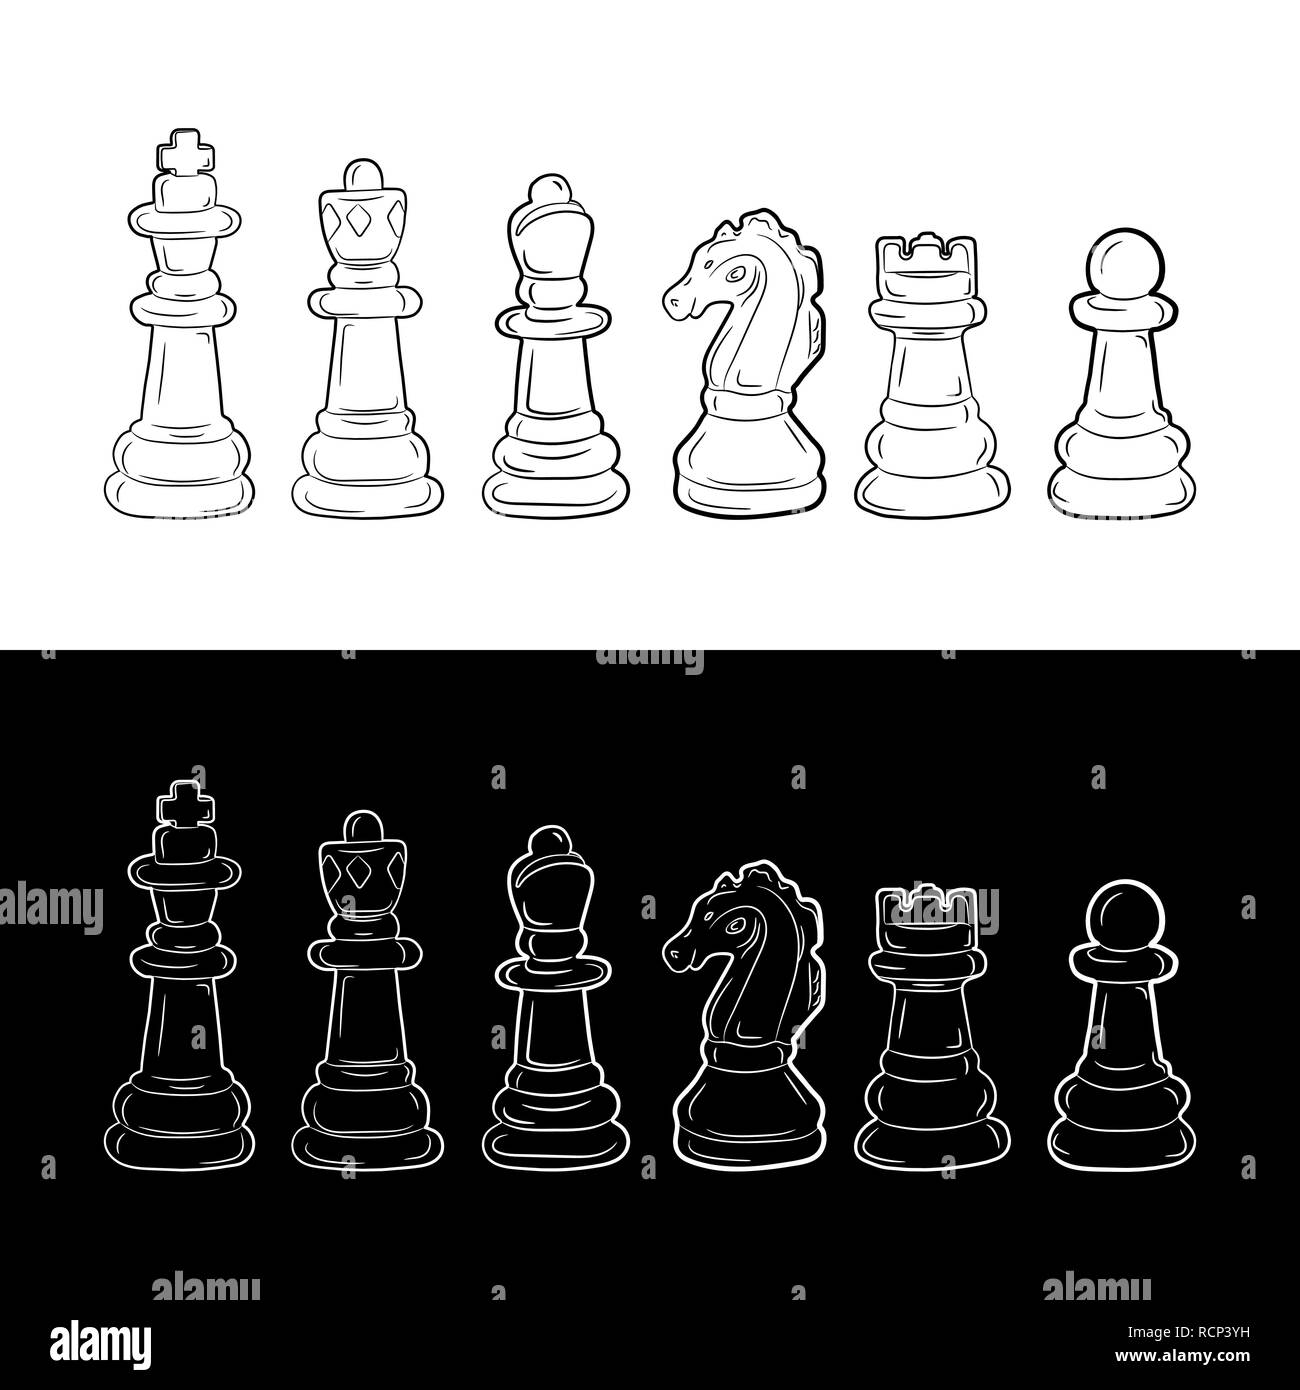 Premium Vector  Set of chess pieces flet style vector